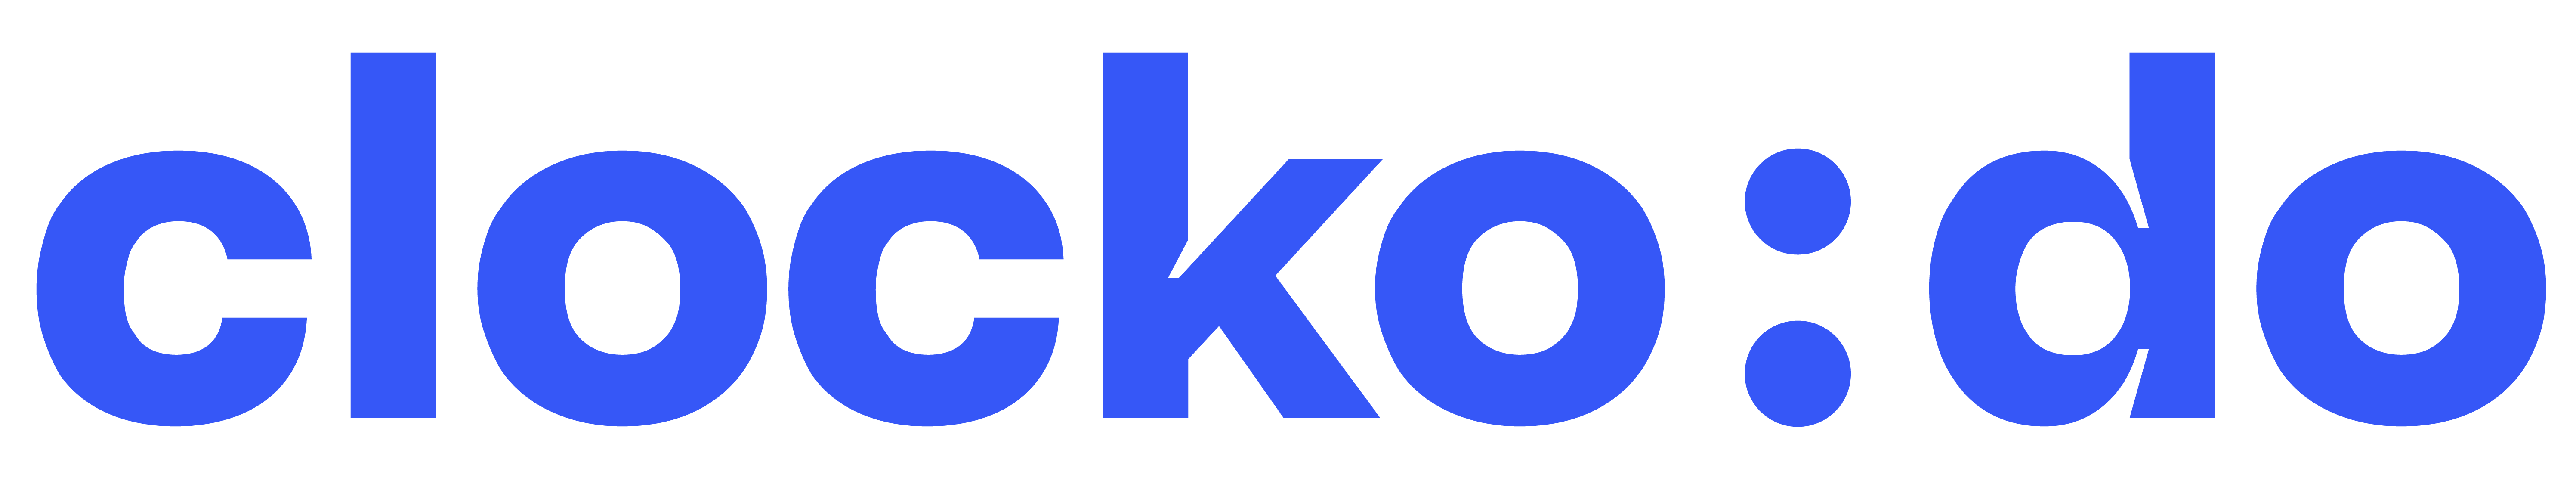 clockodo-logo